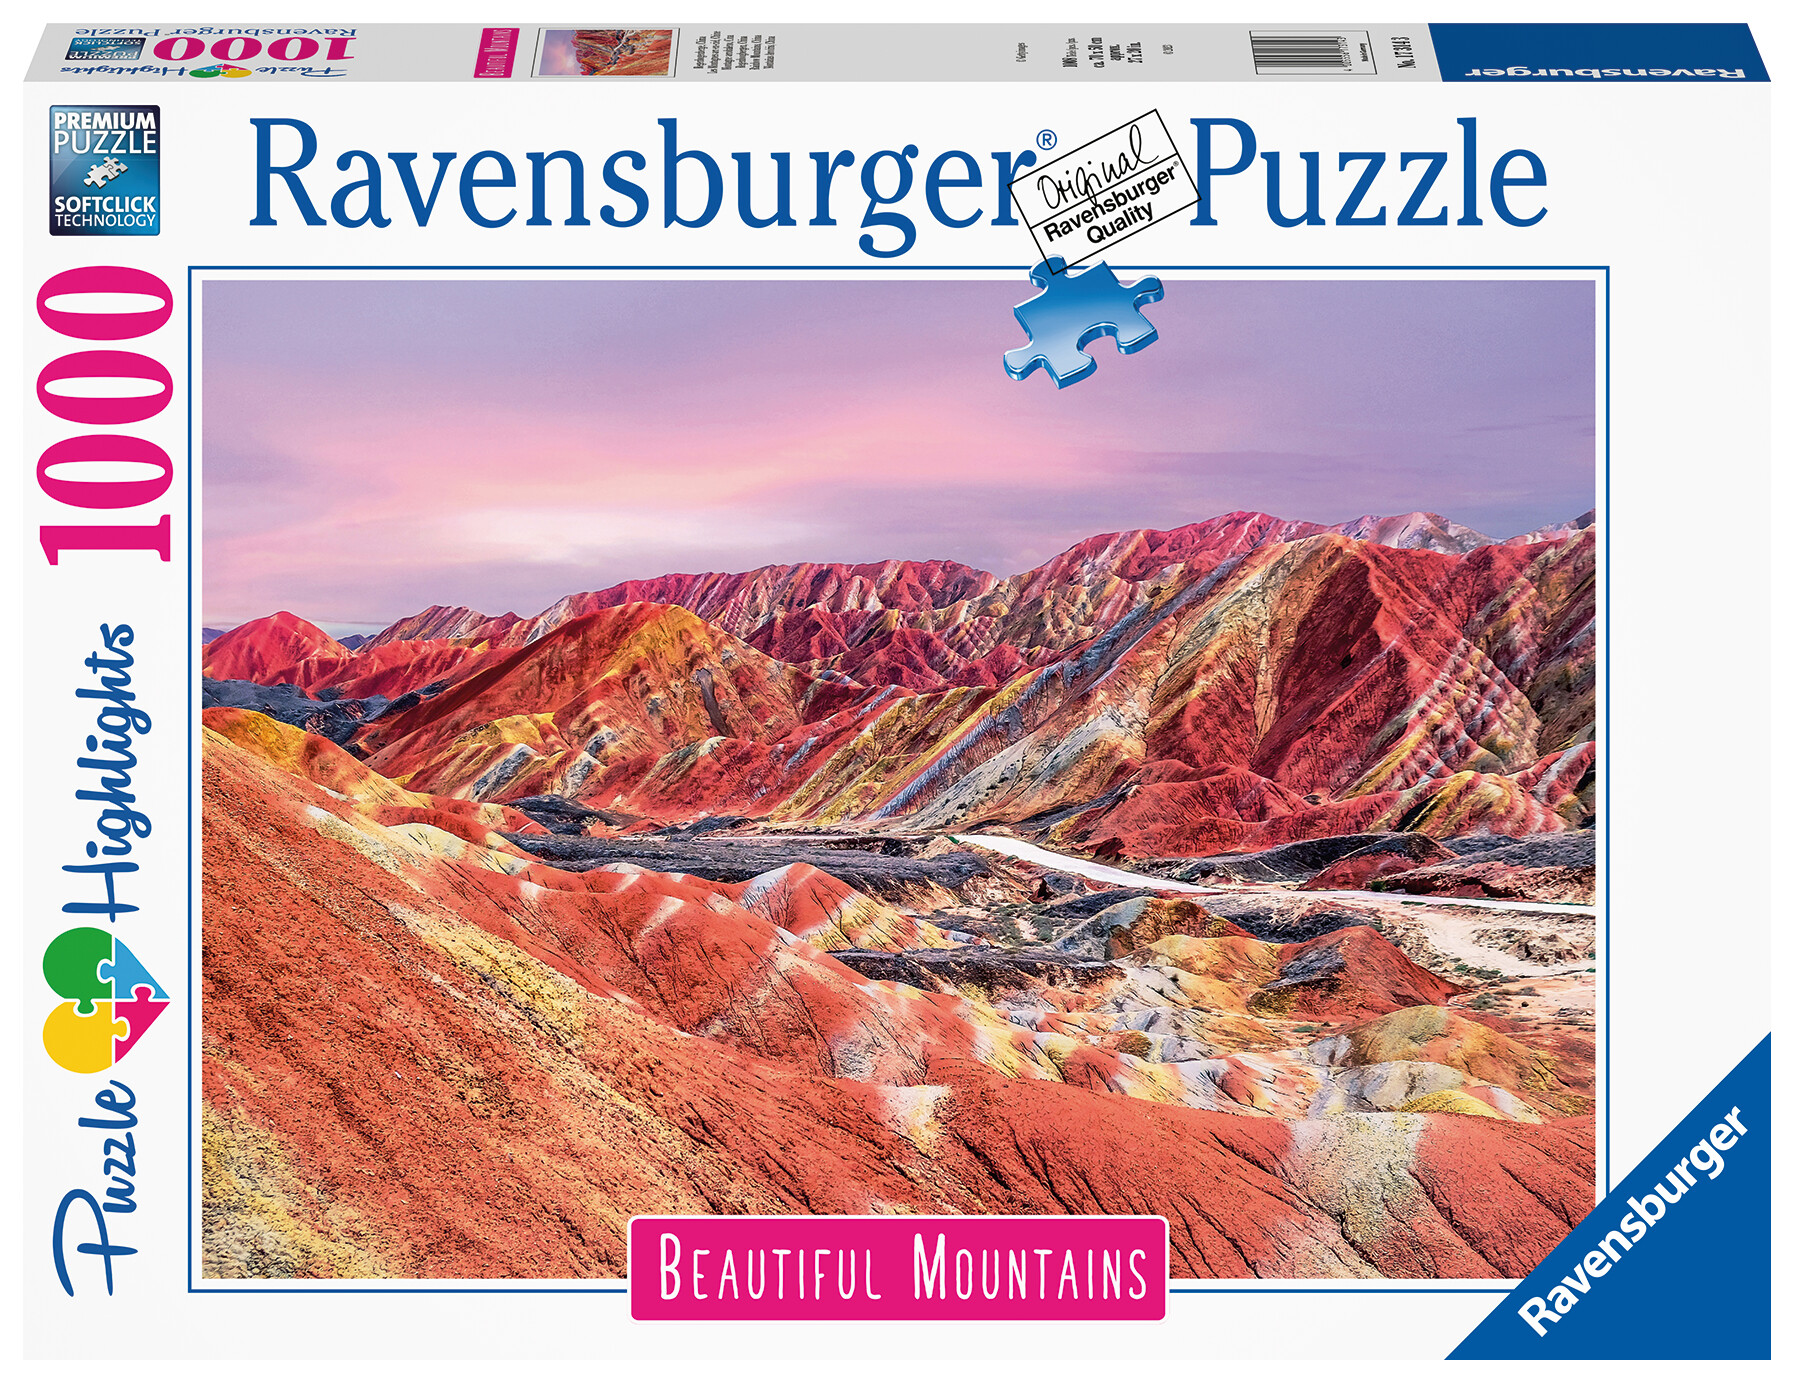 Ravensburger - puzzle montagne arcobaleno, cina, collezione beautiful mountains, 1000 pezzi, puzzle adulti - RAVENSBURGER